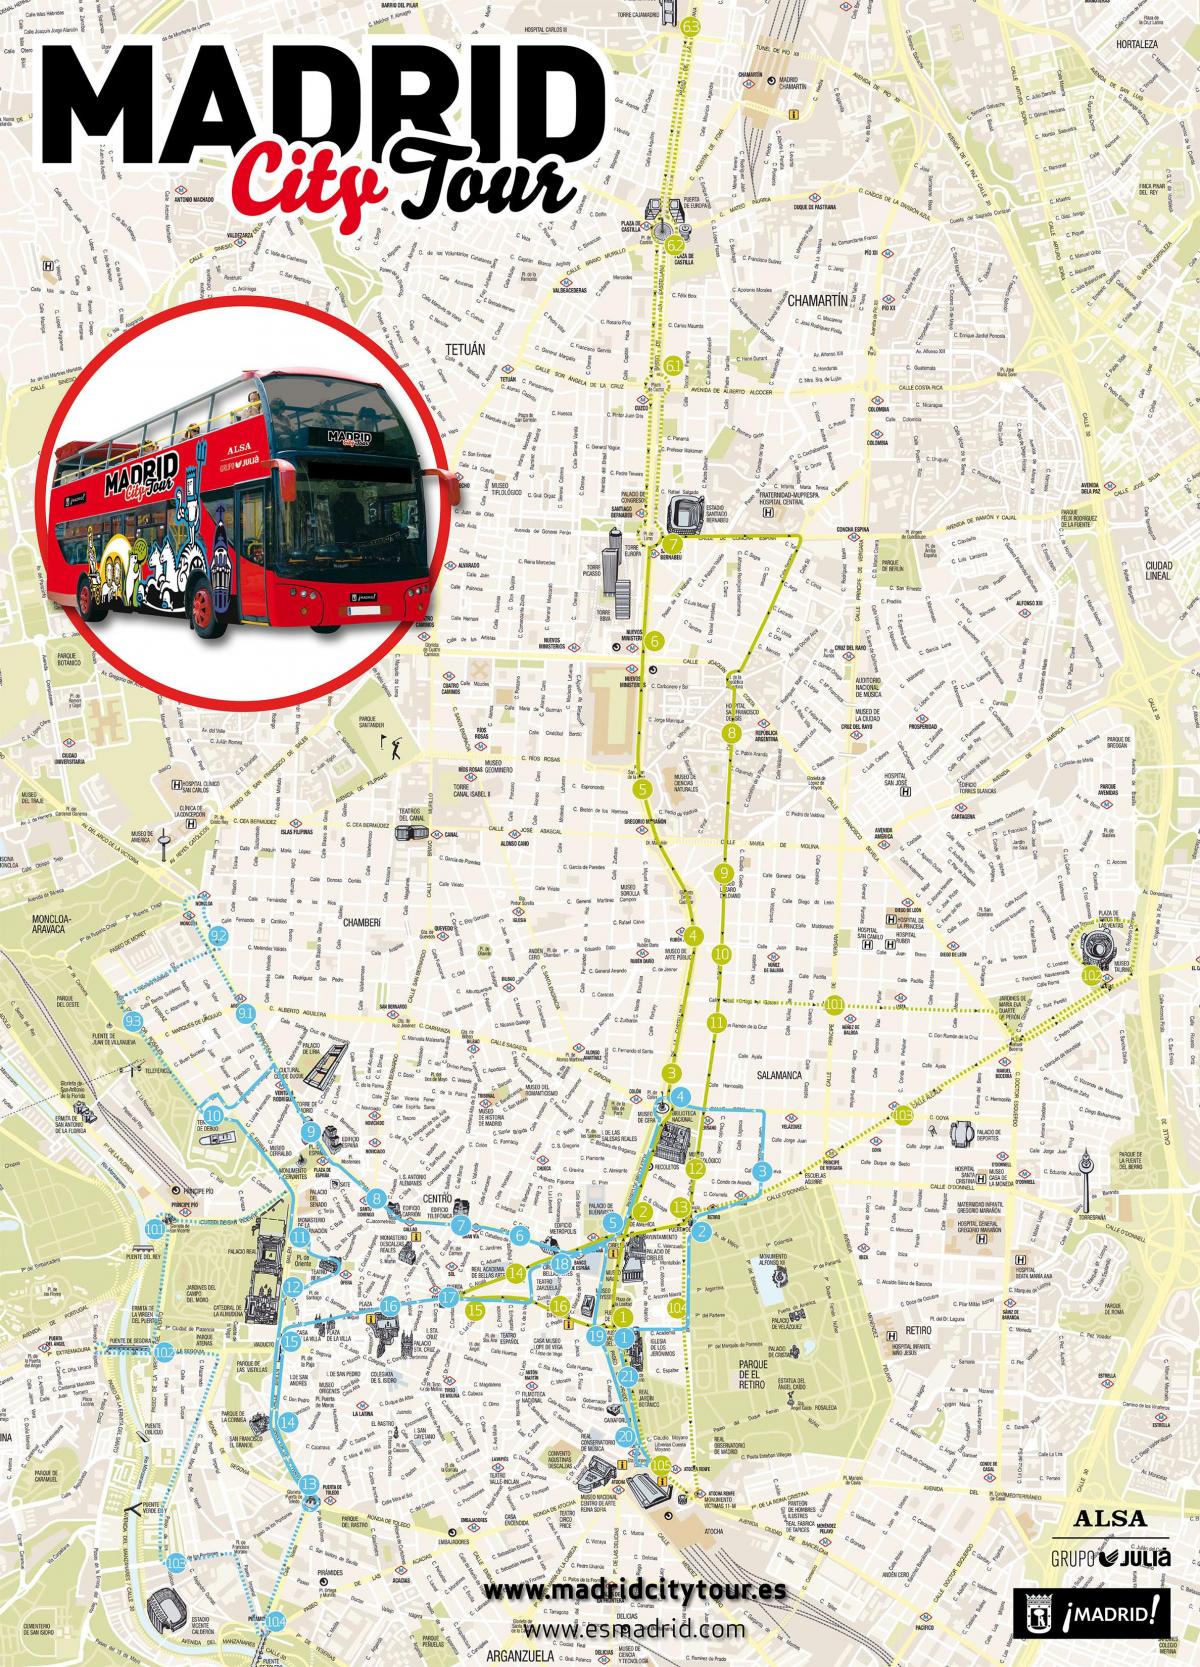 Madrid city bus tour kort